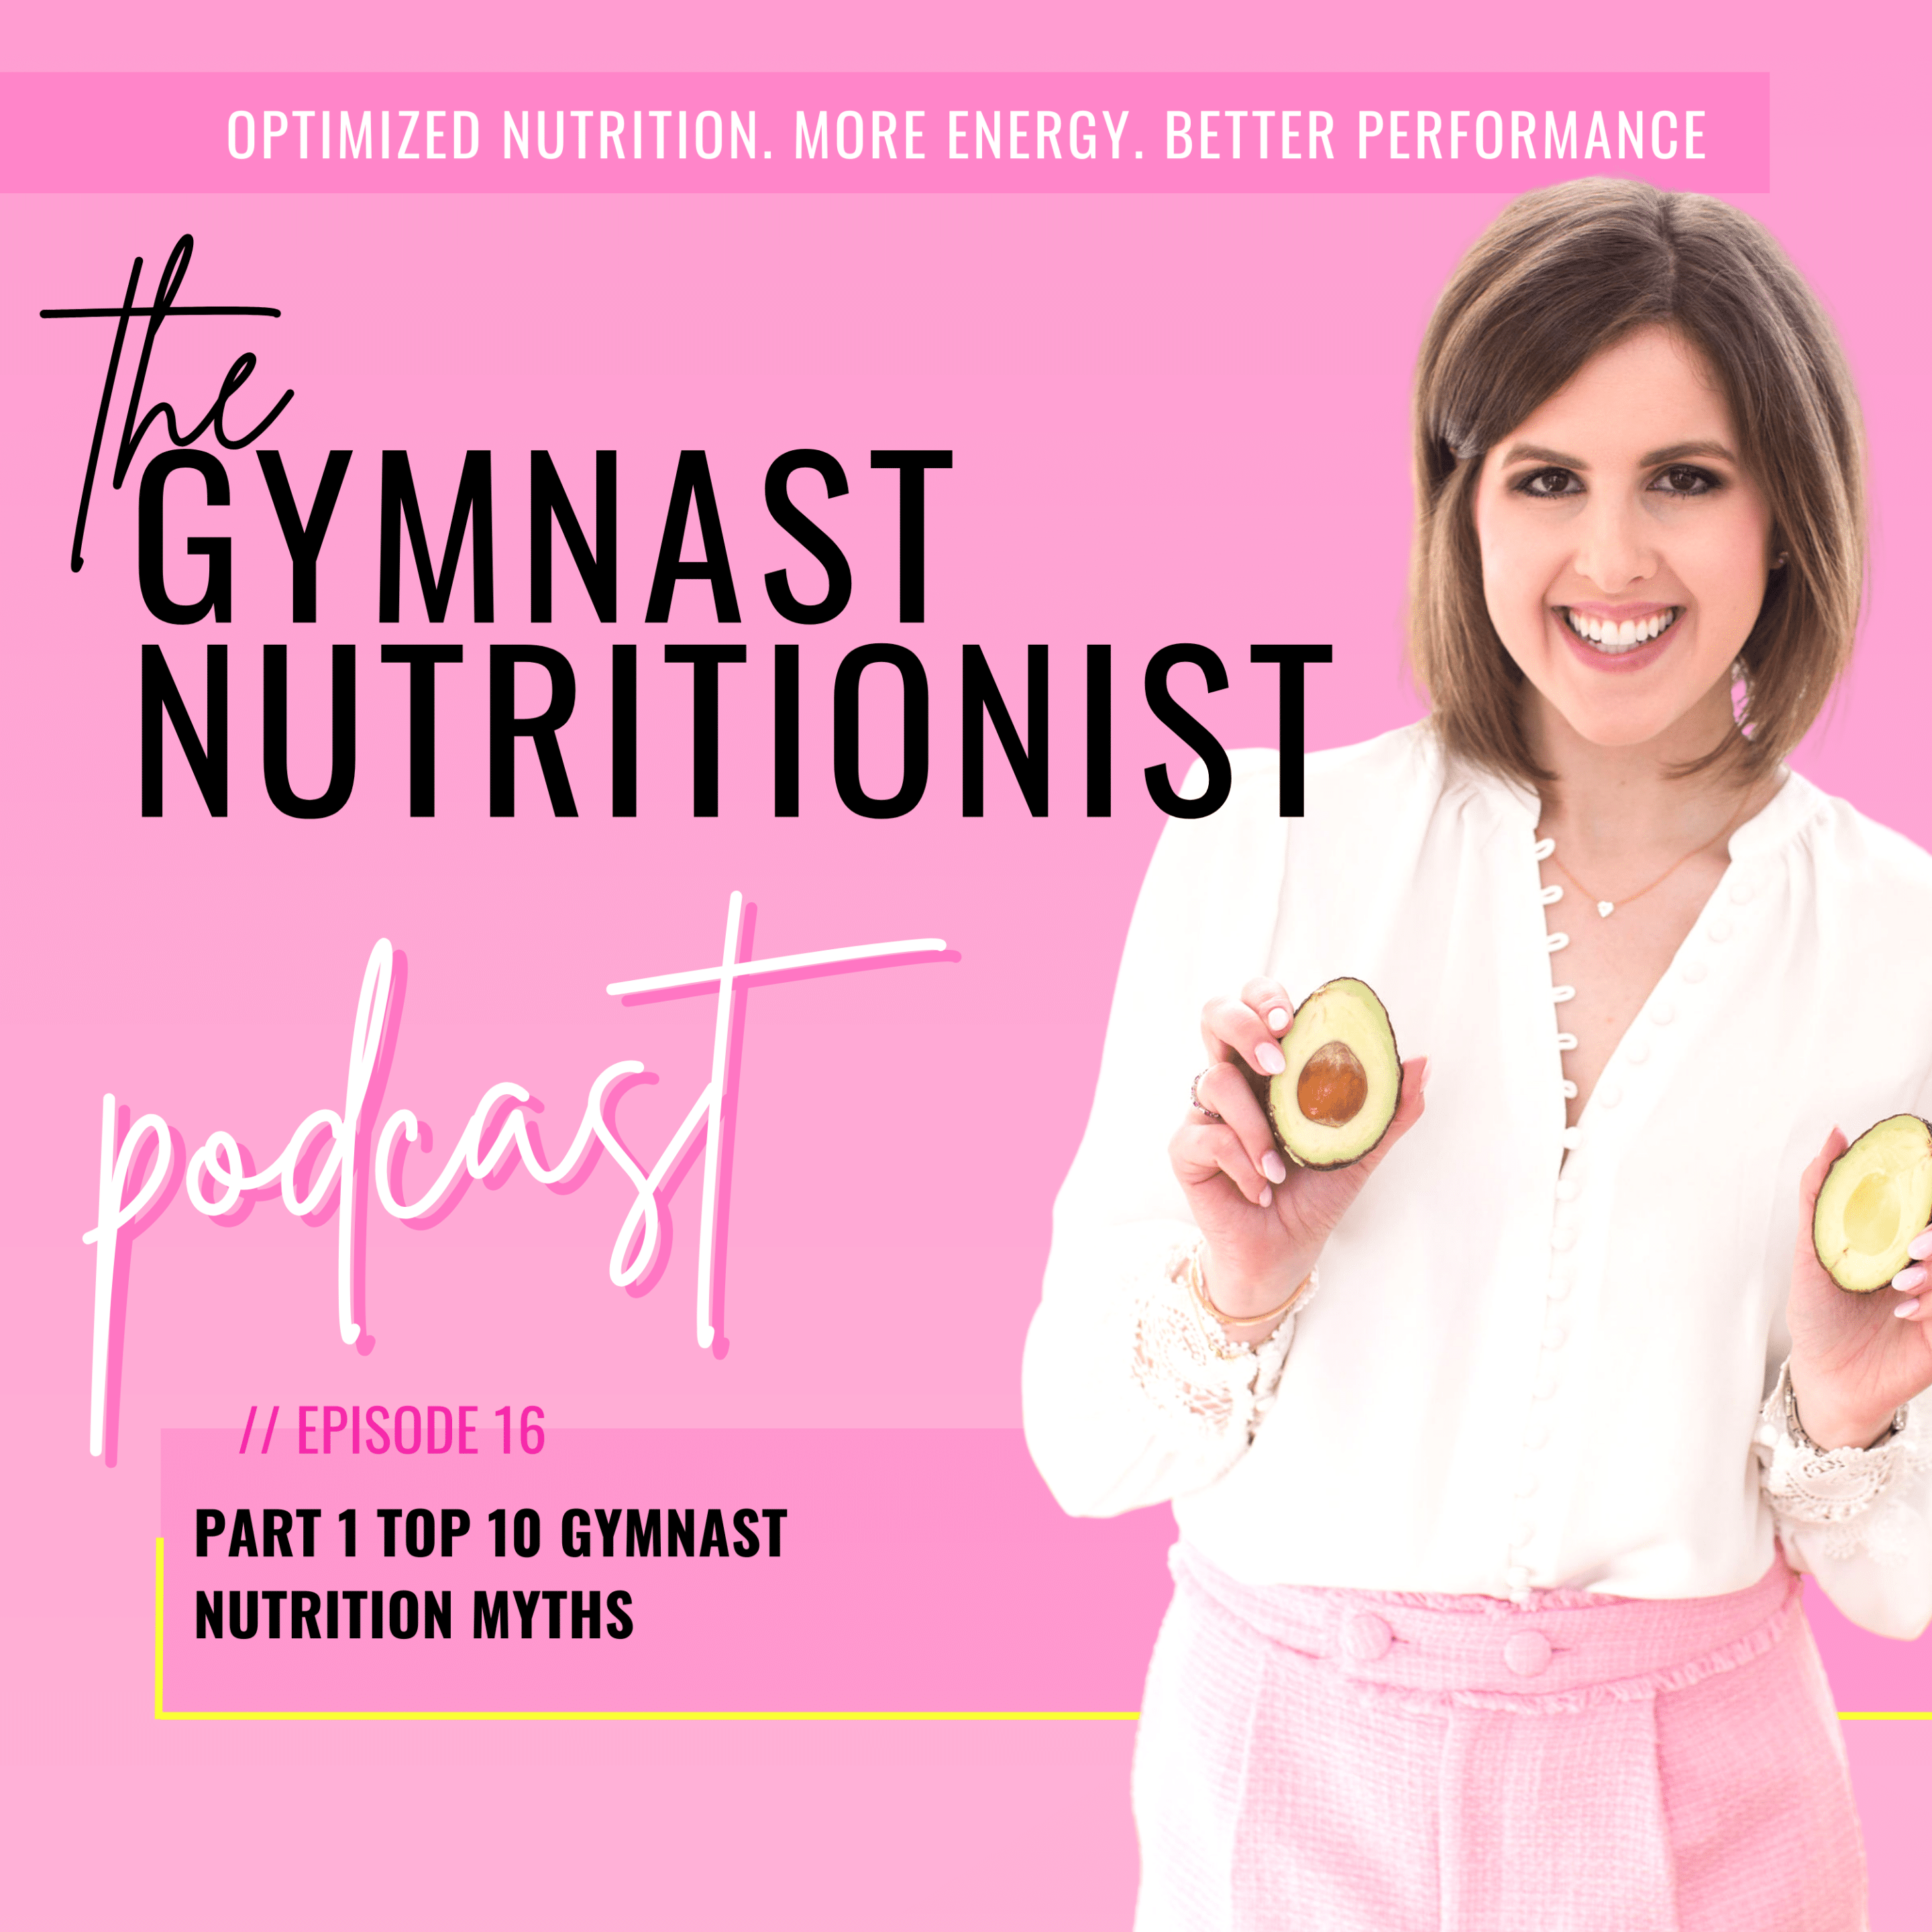 Episode 16: Part 1 Top 10 Gymnast Nutrition Myths